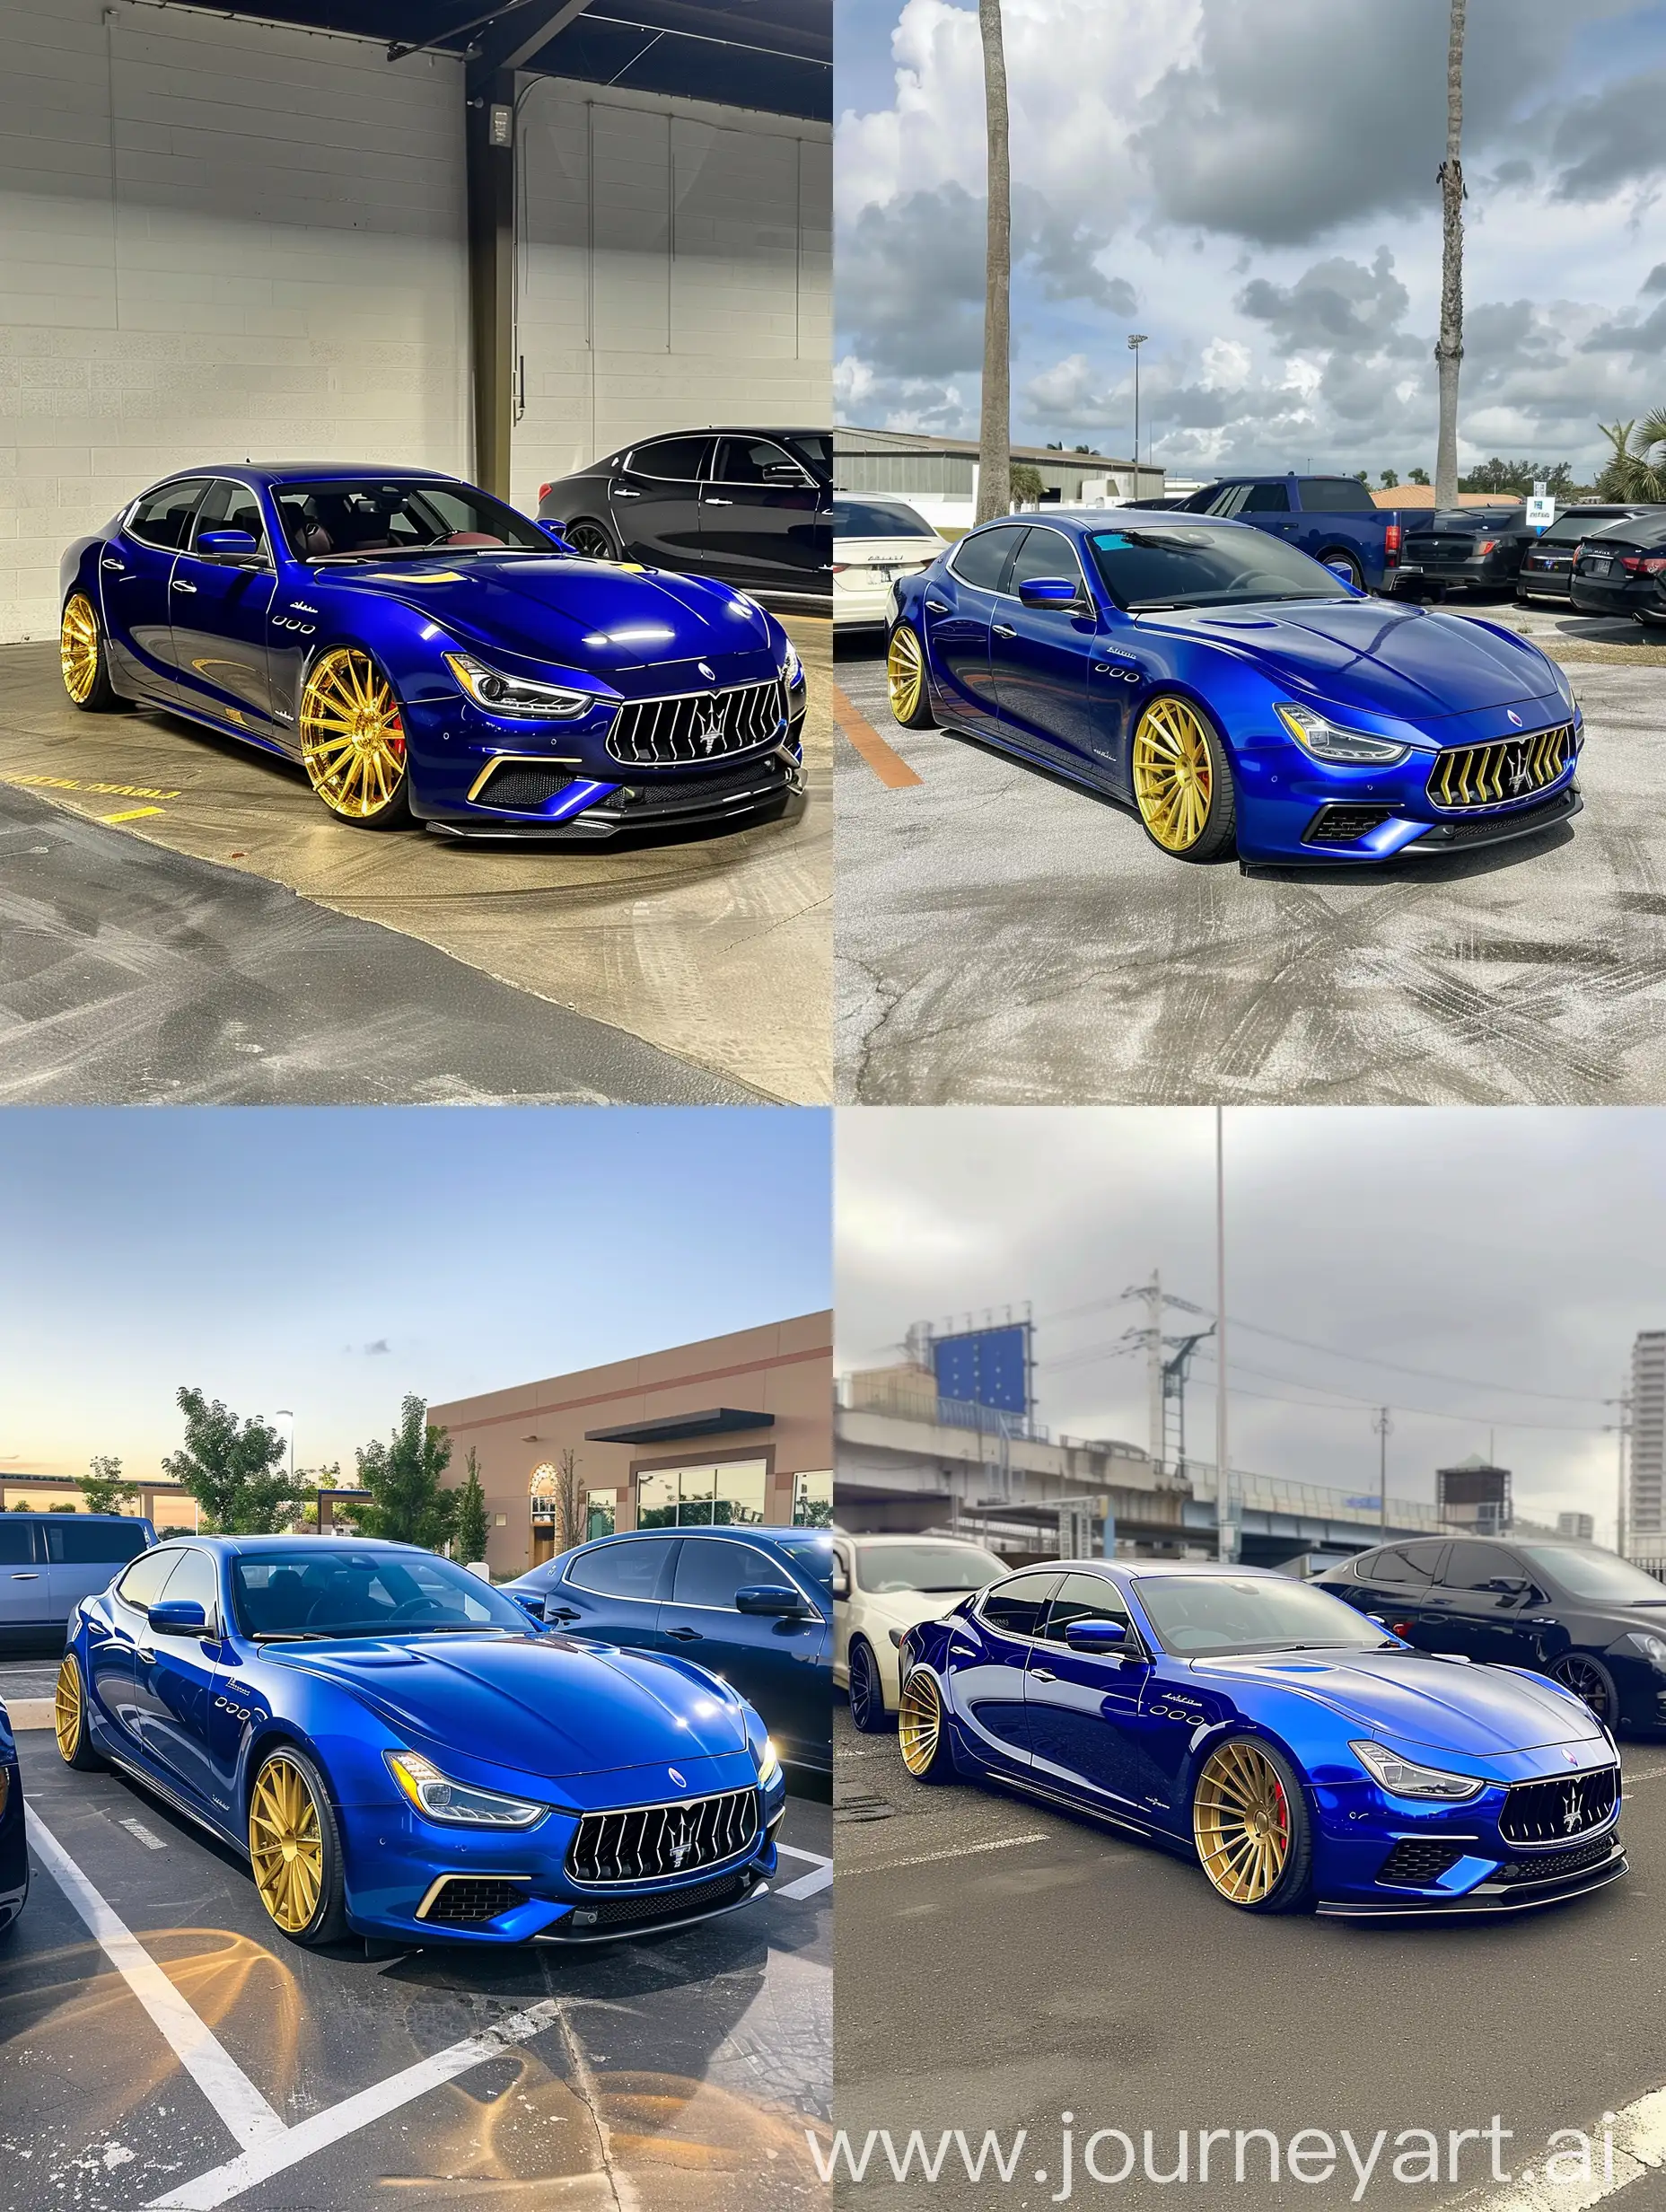 Pinterest style snapchat story van Maserati Ghibli v6 in metallic lak blauw glimmende met goude velgen gespot snap foto slecht gespot realistic naast andere autos 